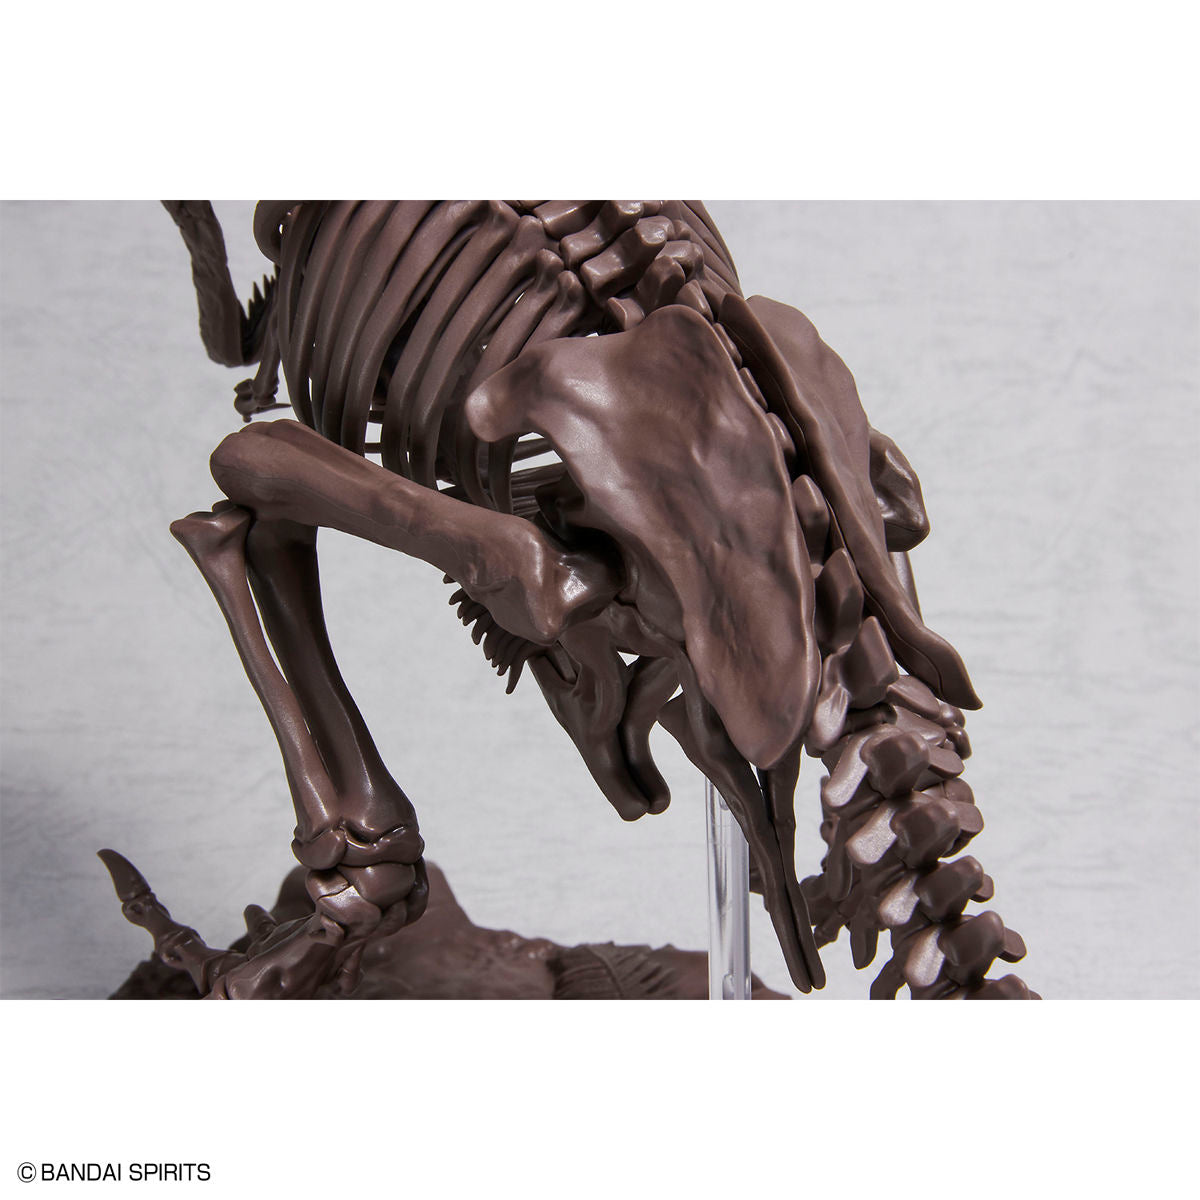 Imaginary Skeleton - Tyrannosaurus